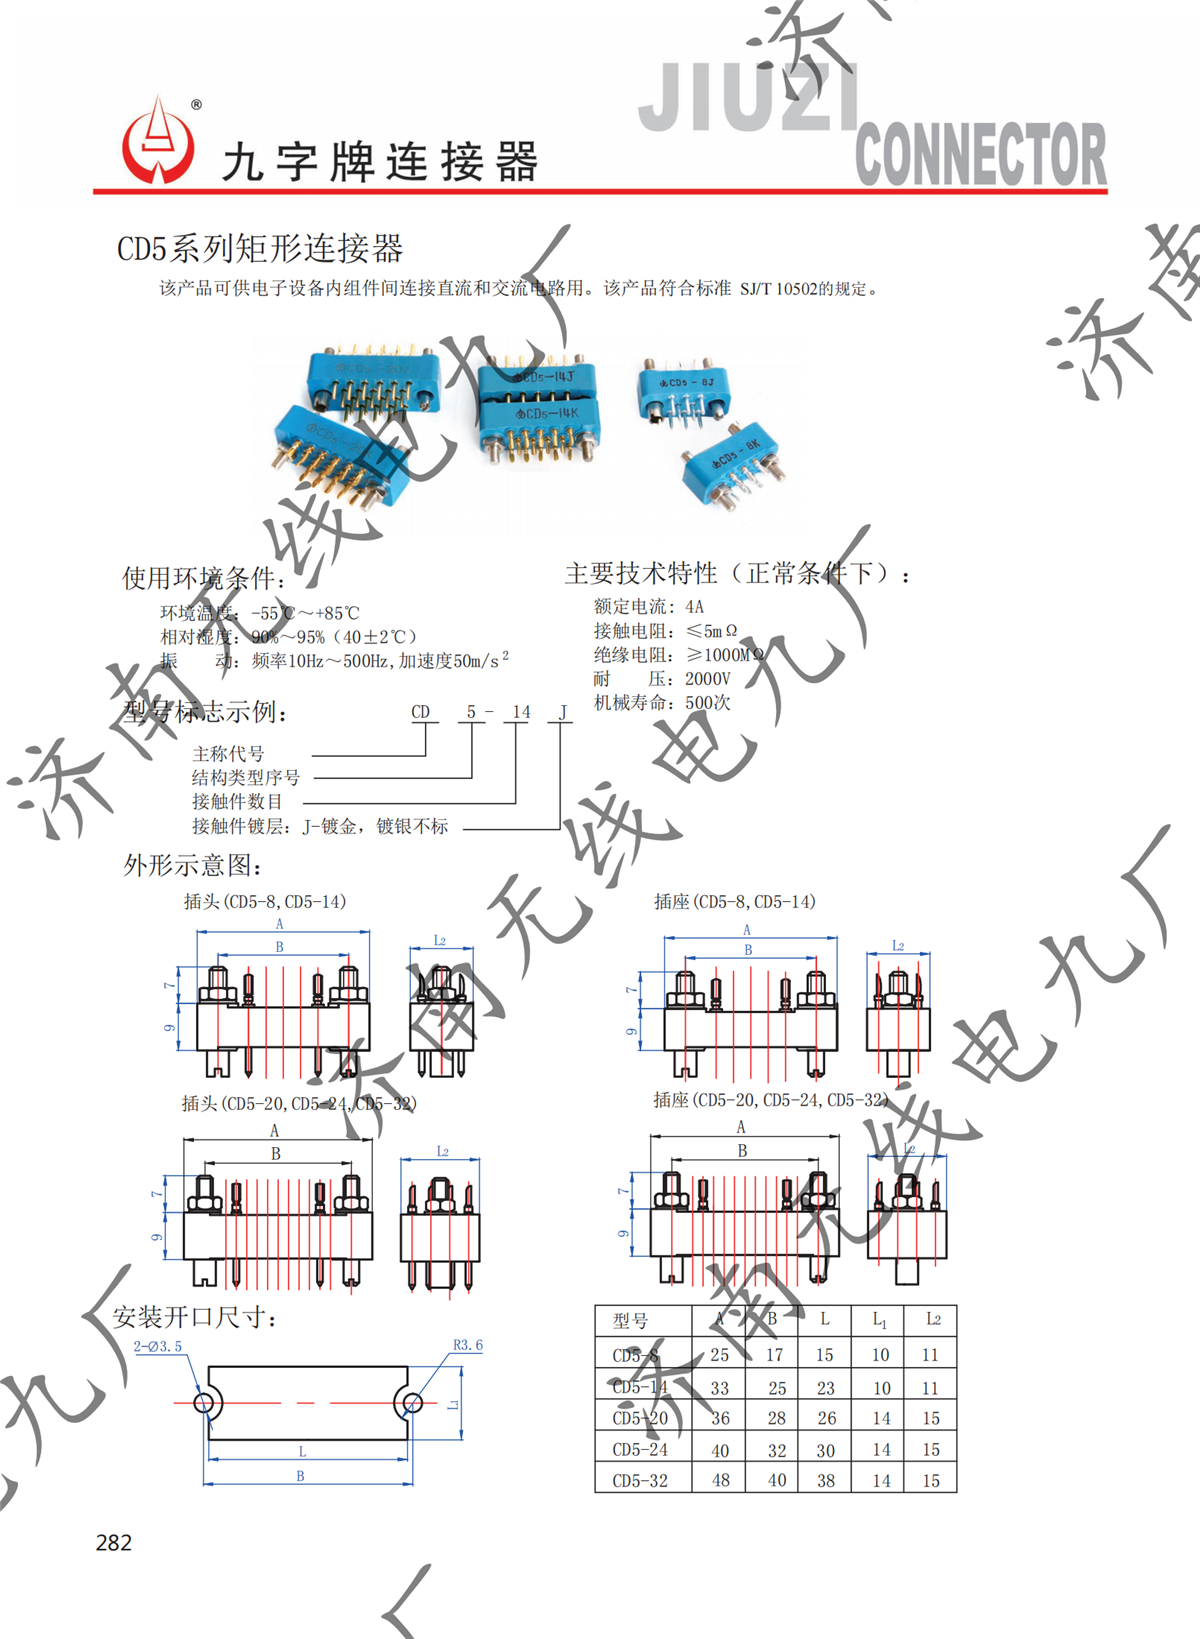 CD5系列矩形连接器_00.png